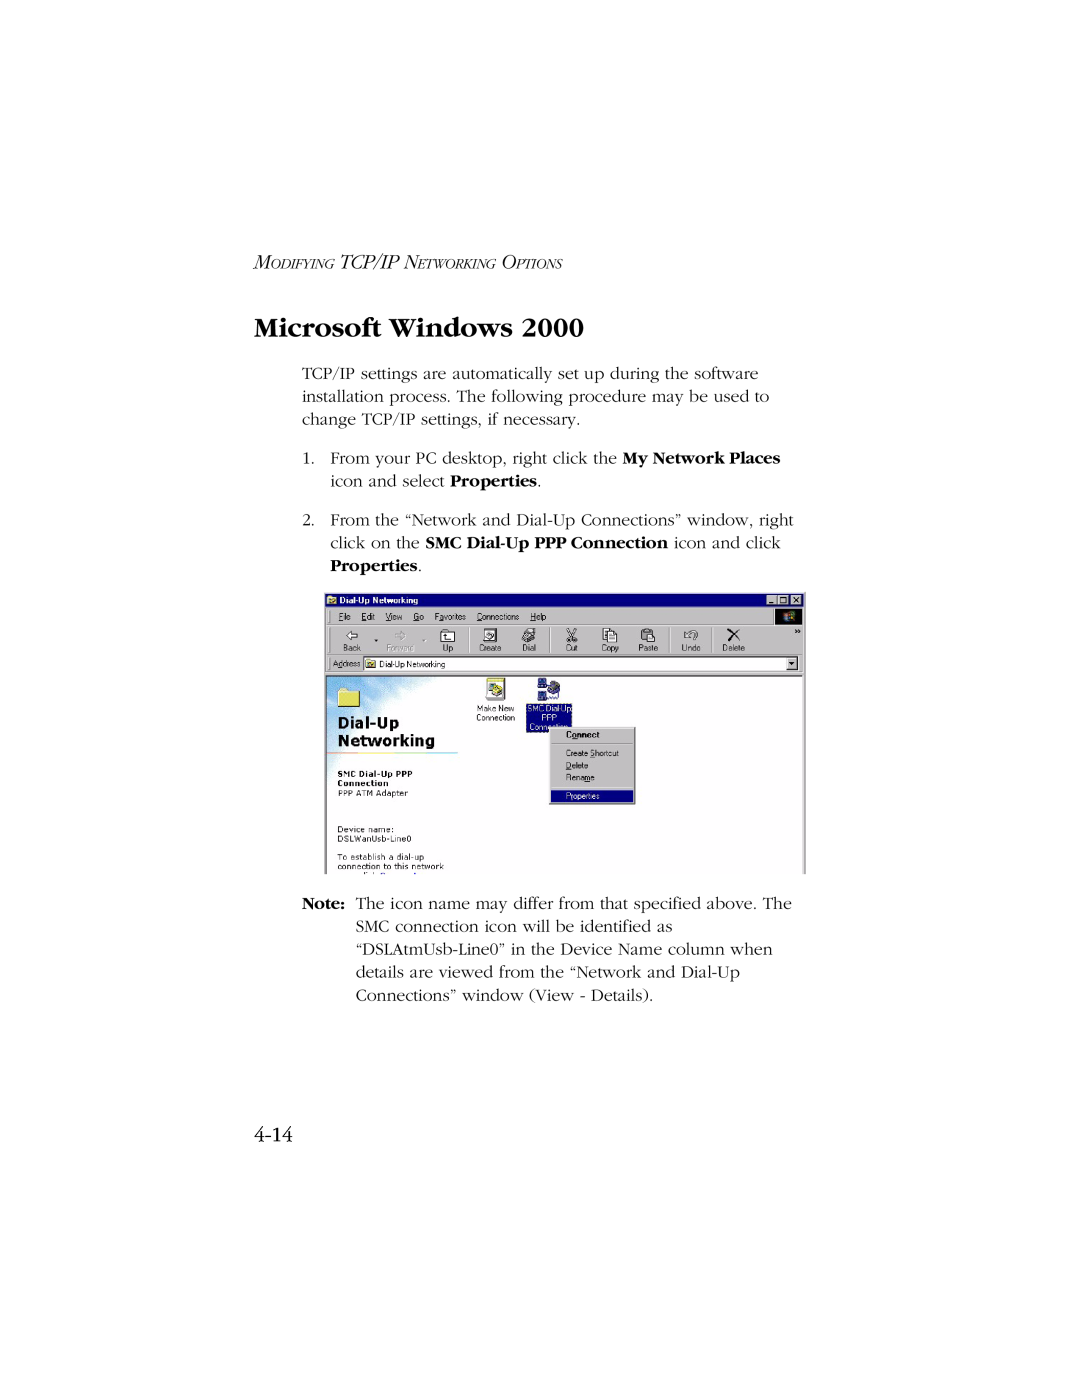 SMC Networks SMC7003-USB manual Microsoft Windows, 4-14, Modifying Tcp/Ip Networking Options 